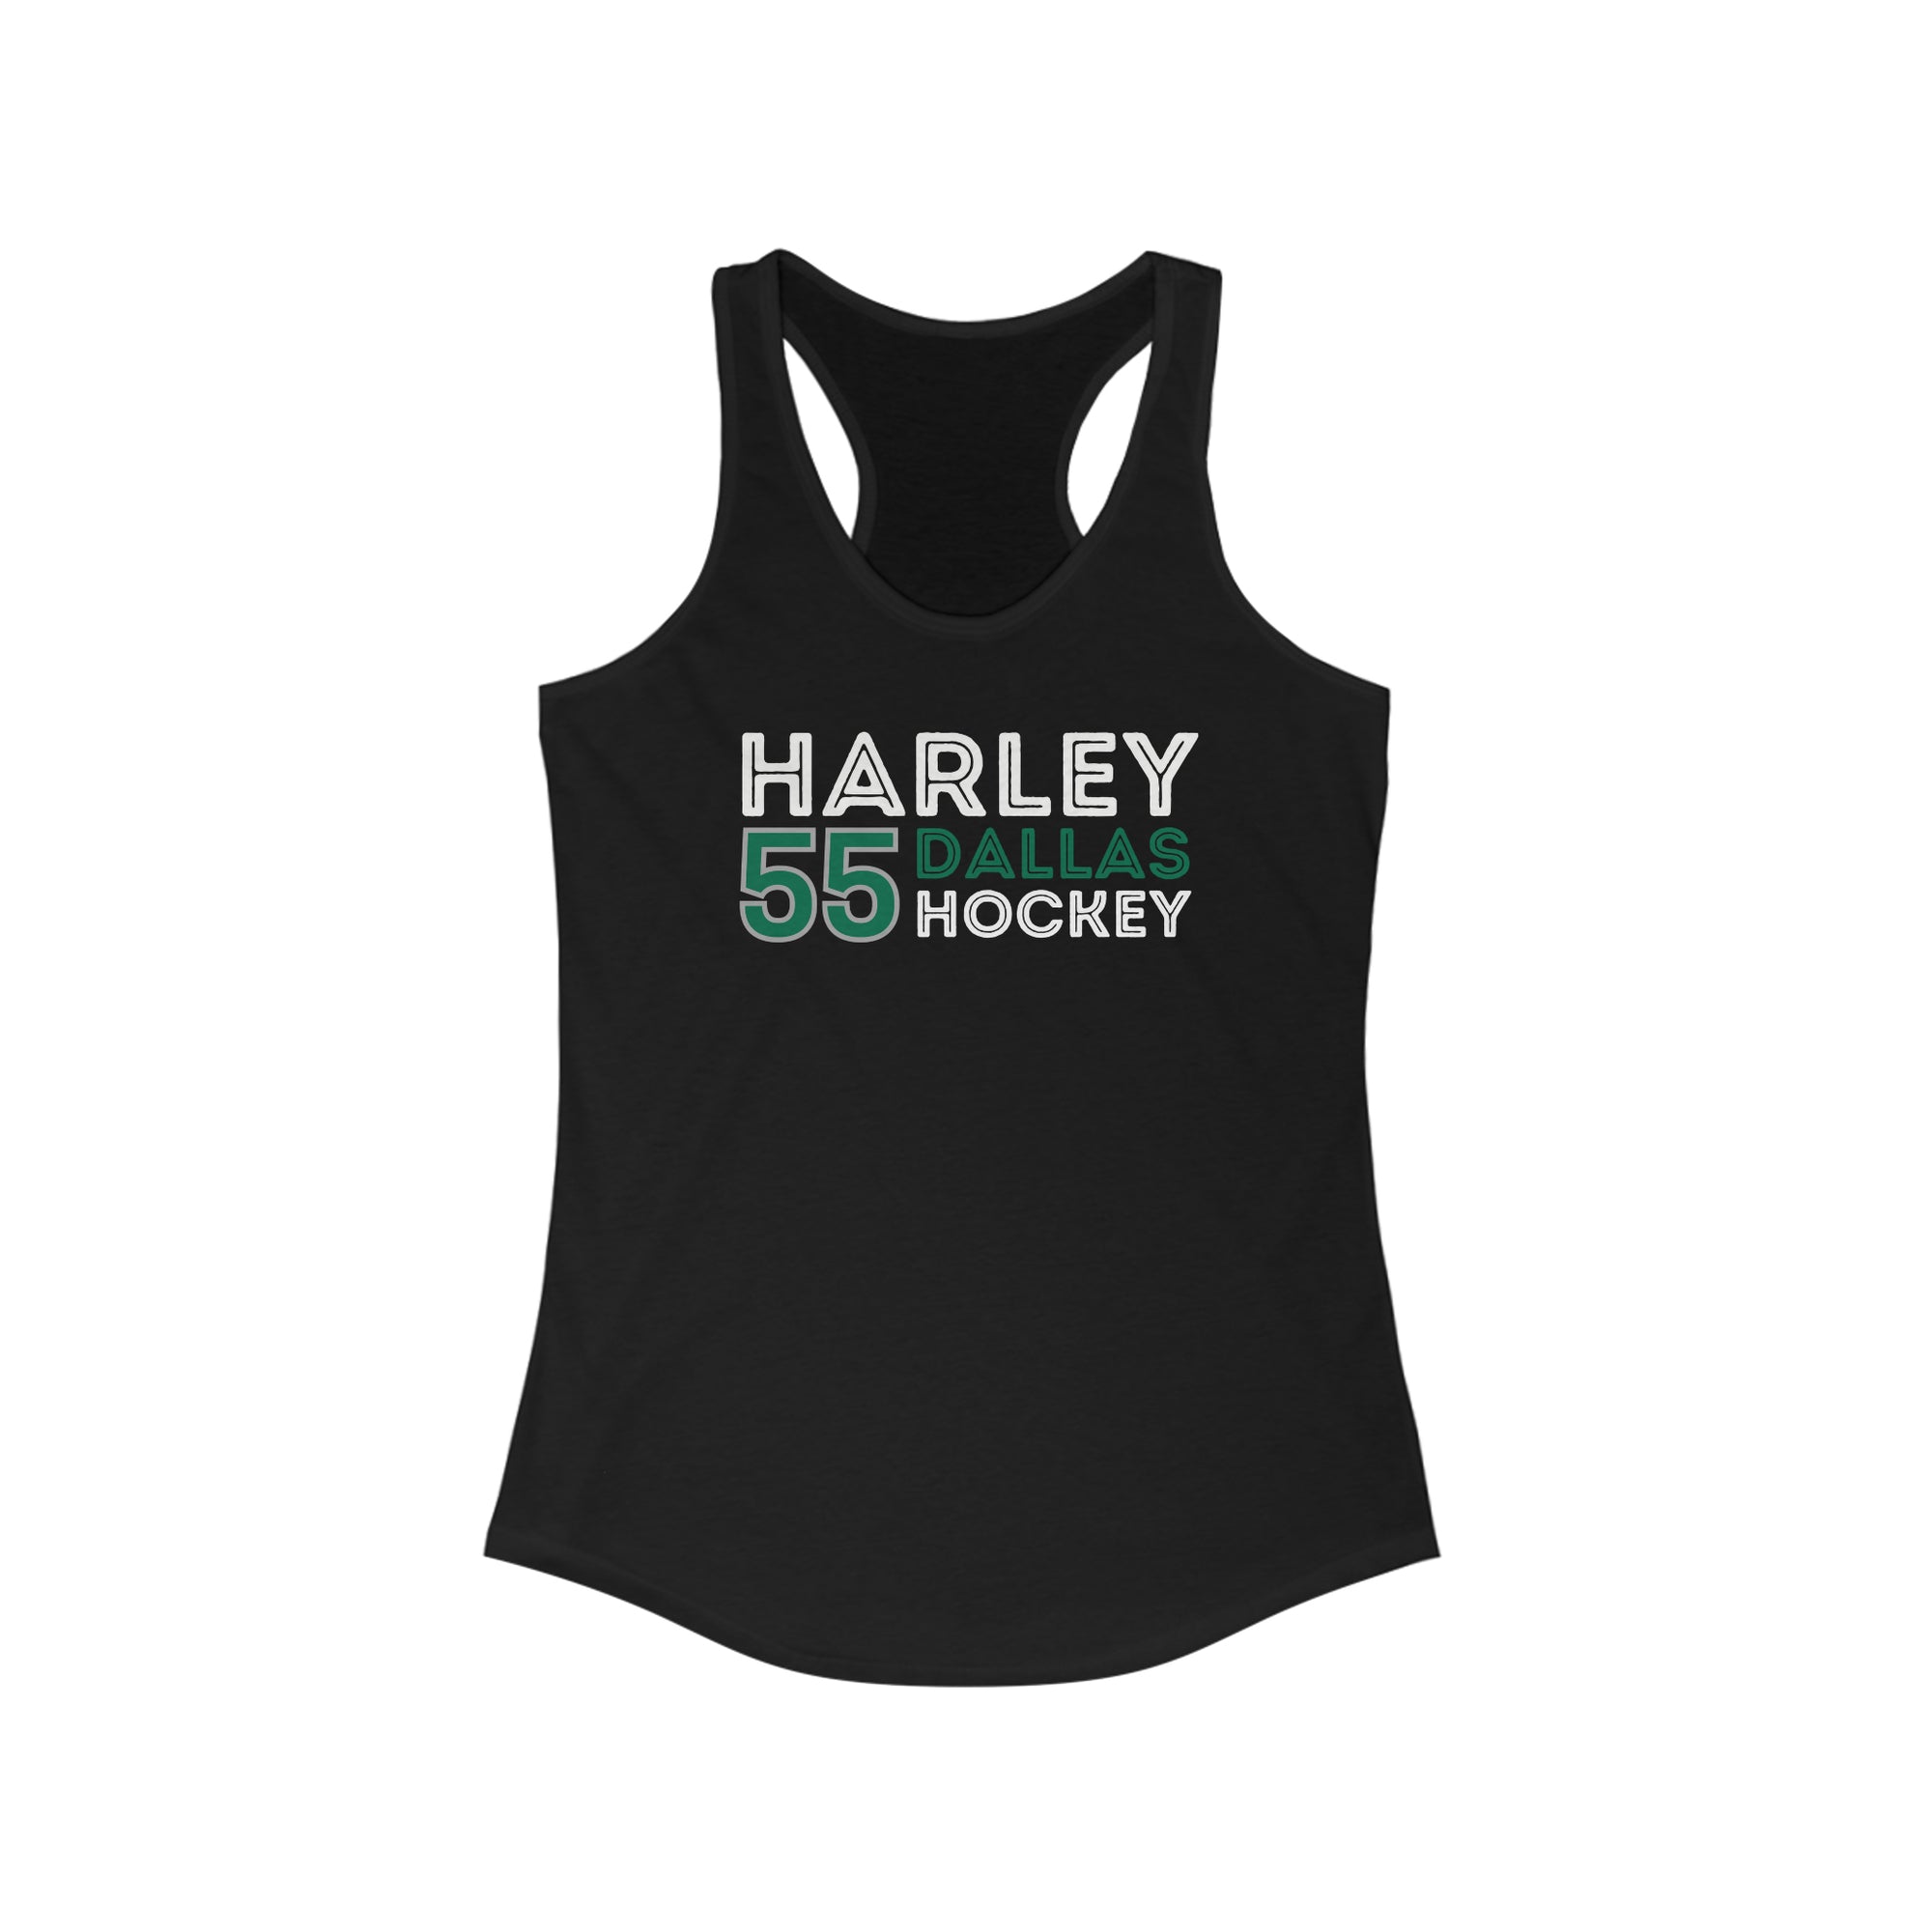 Harley 55 Dallas Hockey Grafitti Wall Design Women's Ideal Racerback Tank Top